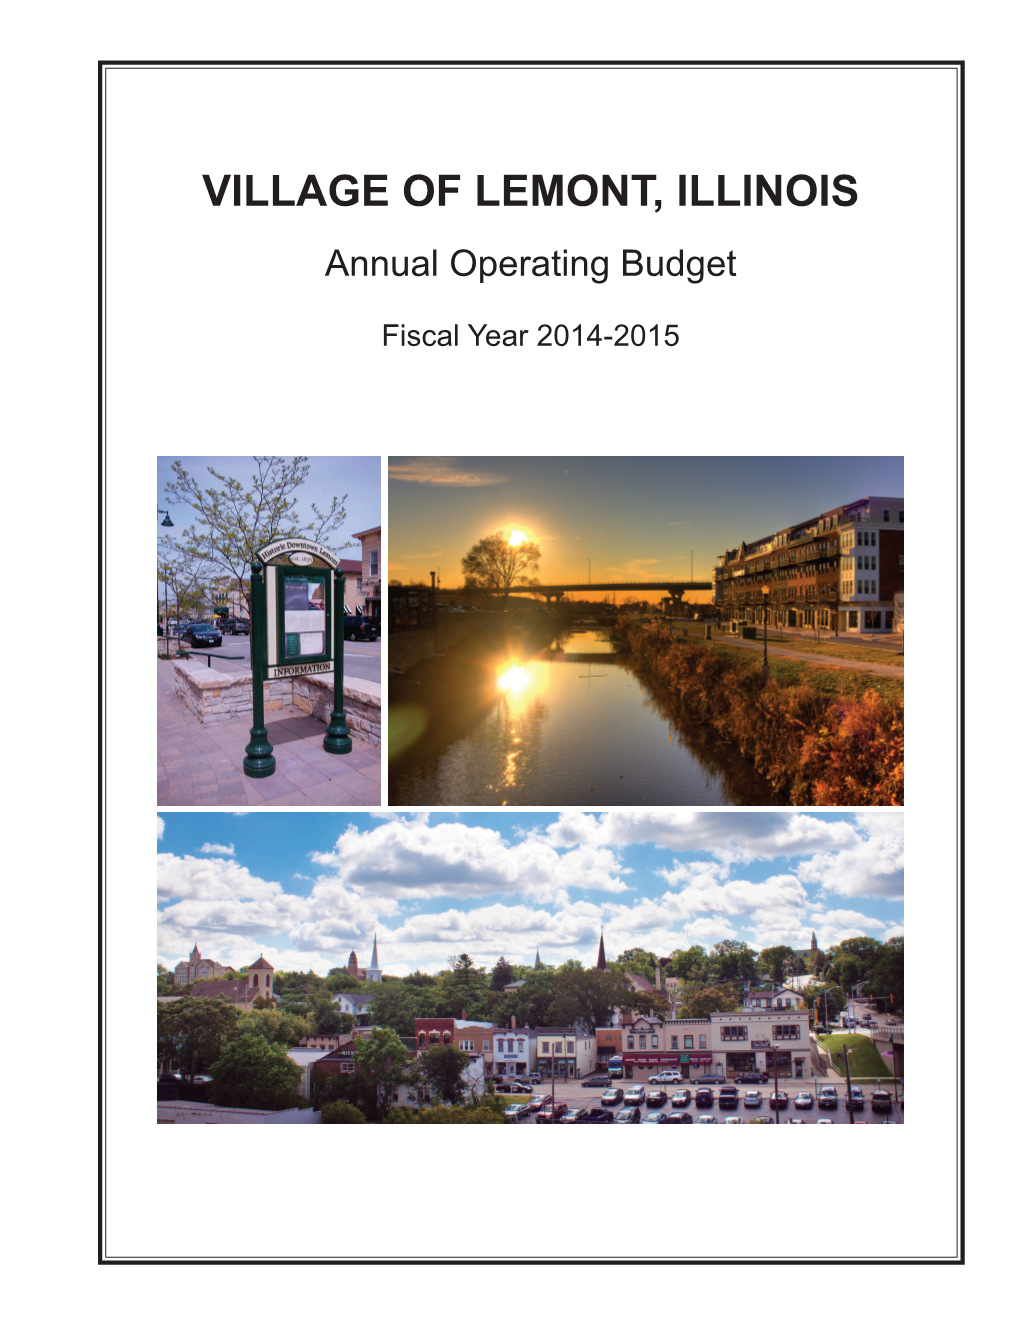 VILLAGE of LEMONT, ILLINOIS Annual Operating Budget